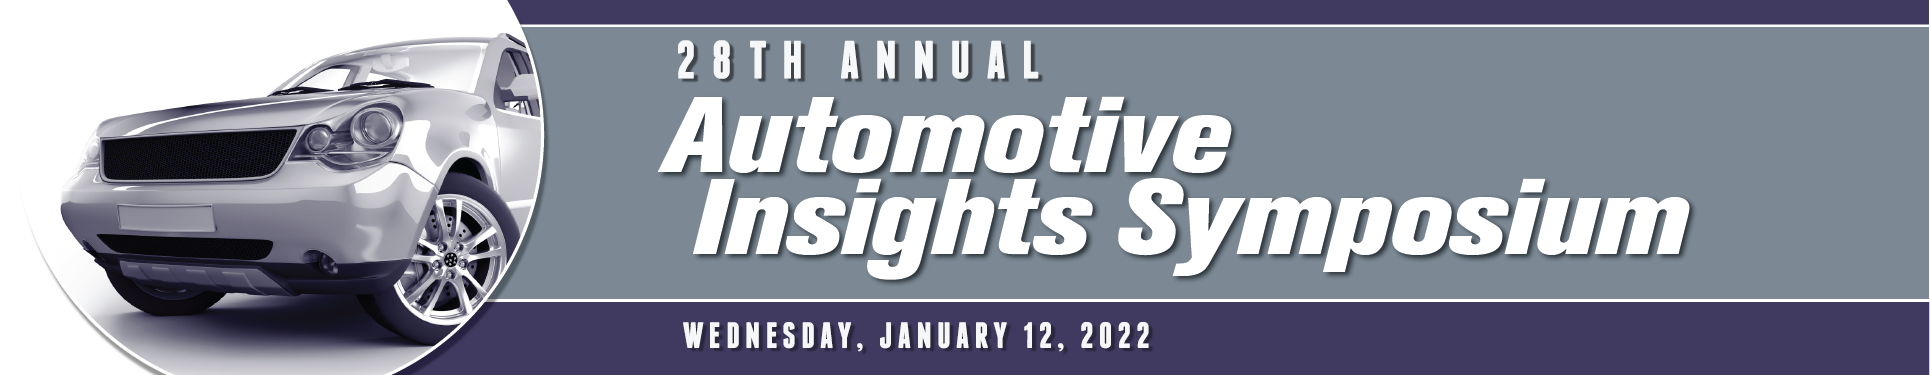 28th Annual Automotive Insights Symposium